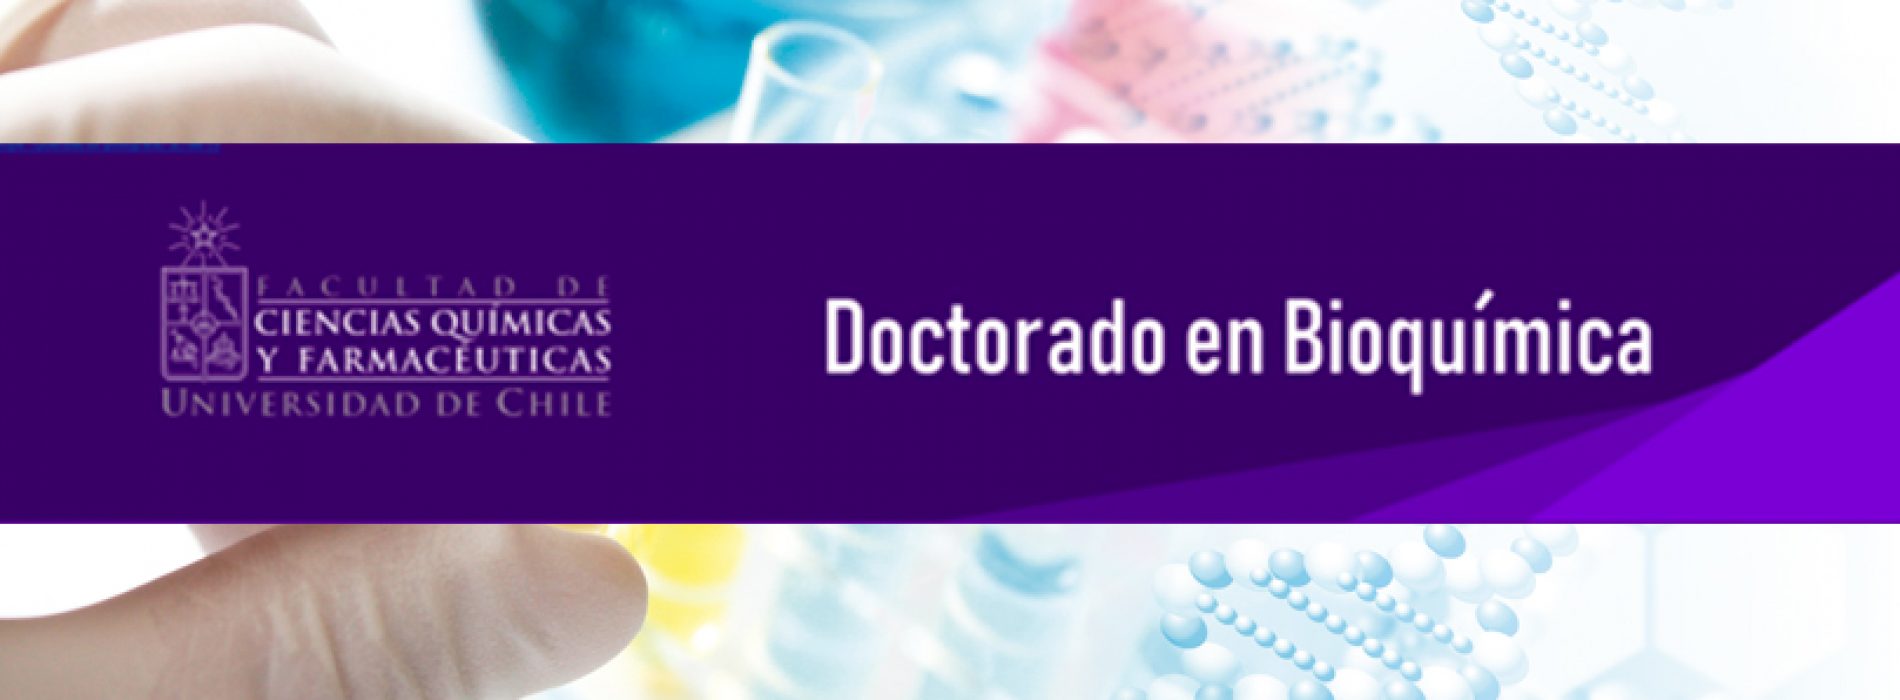 PhD in biochemistry - University of Chile